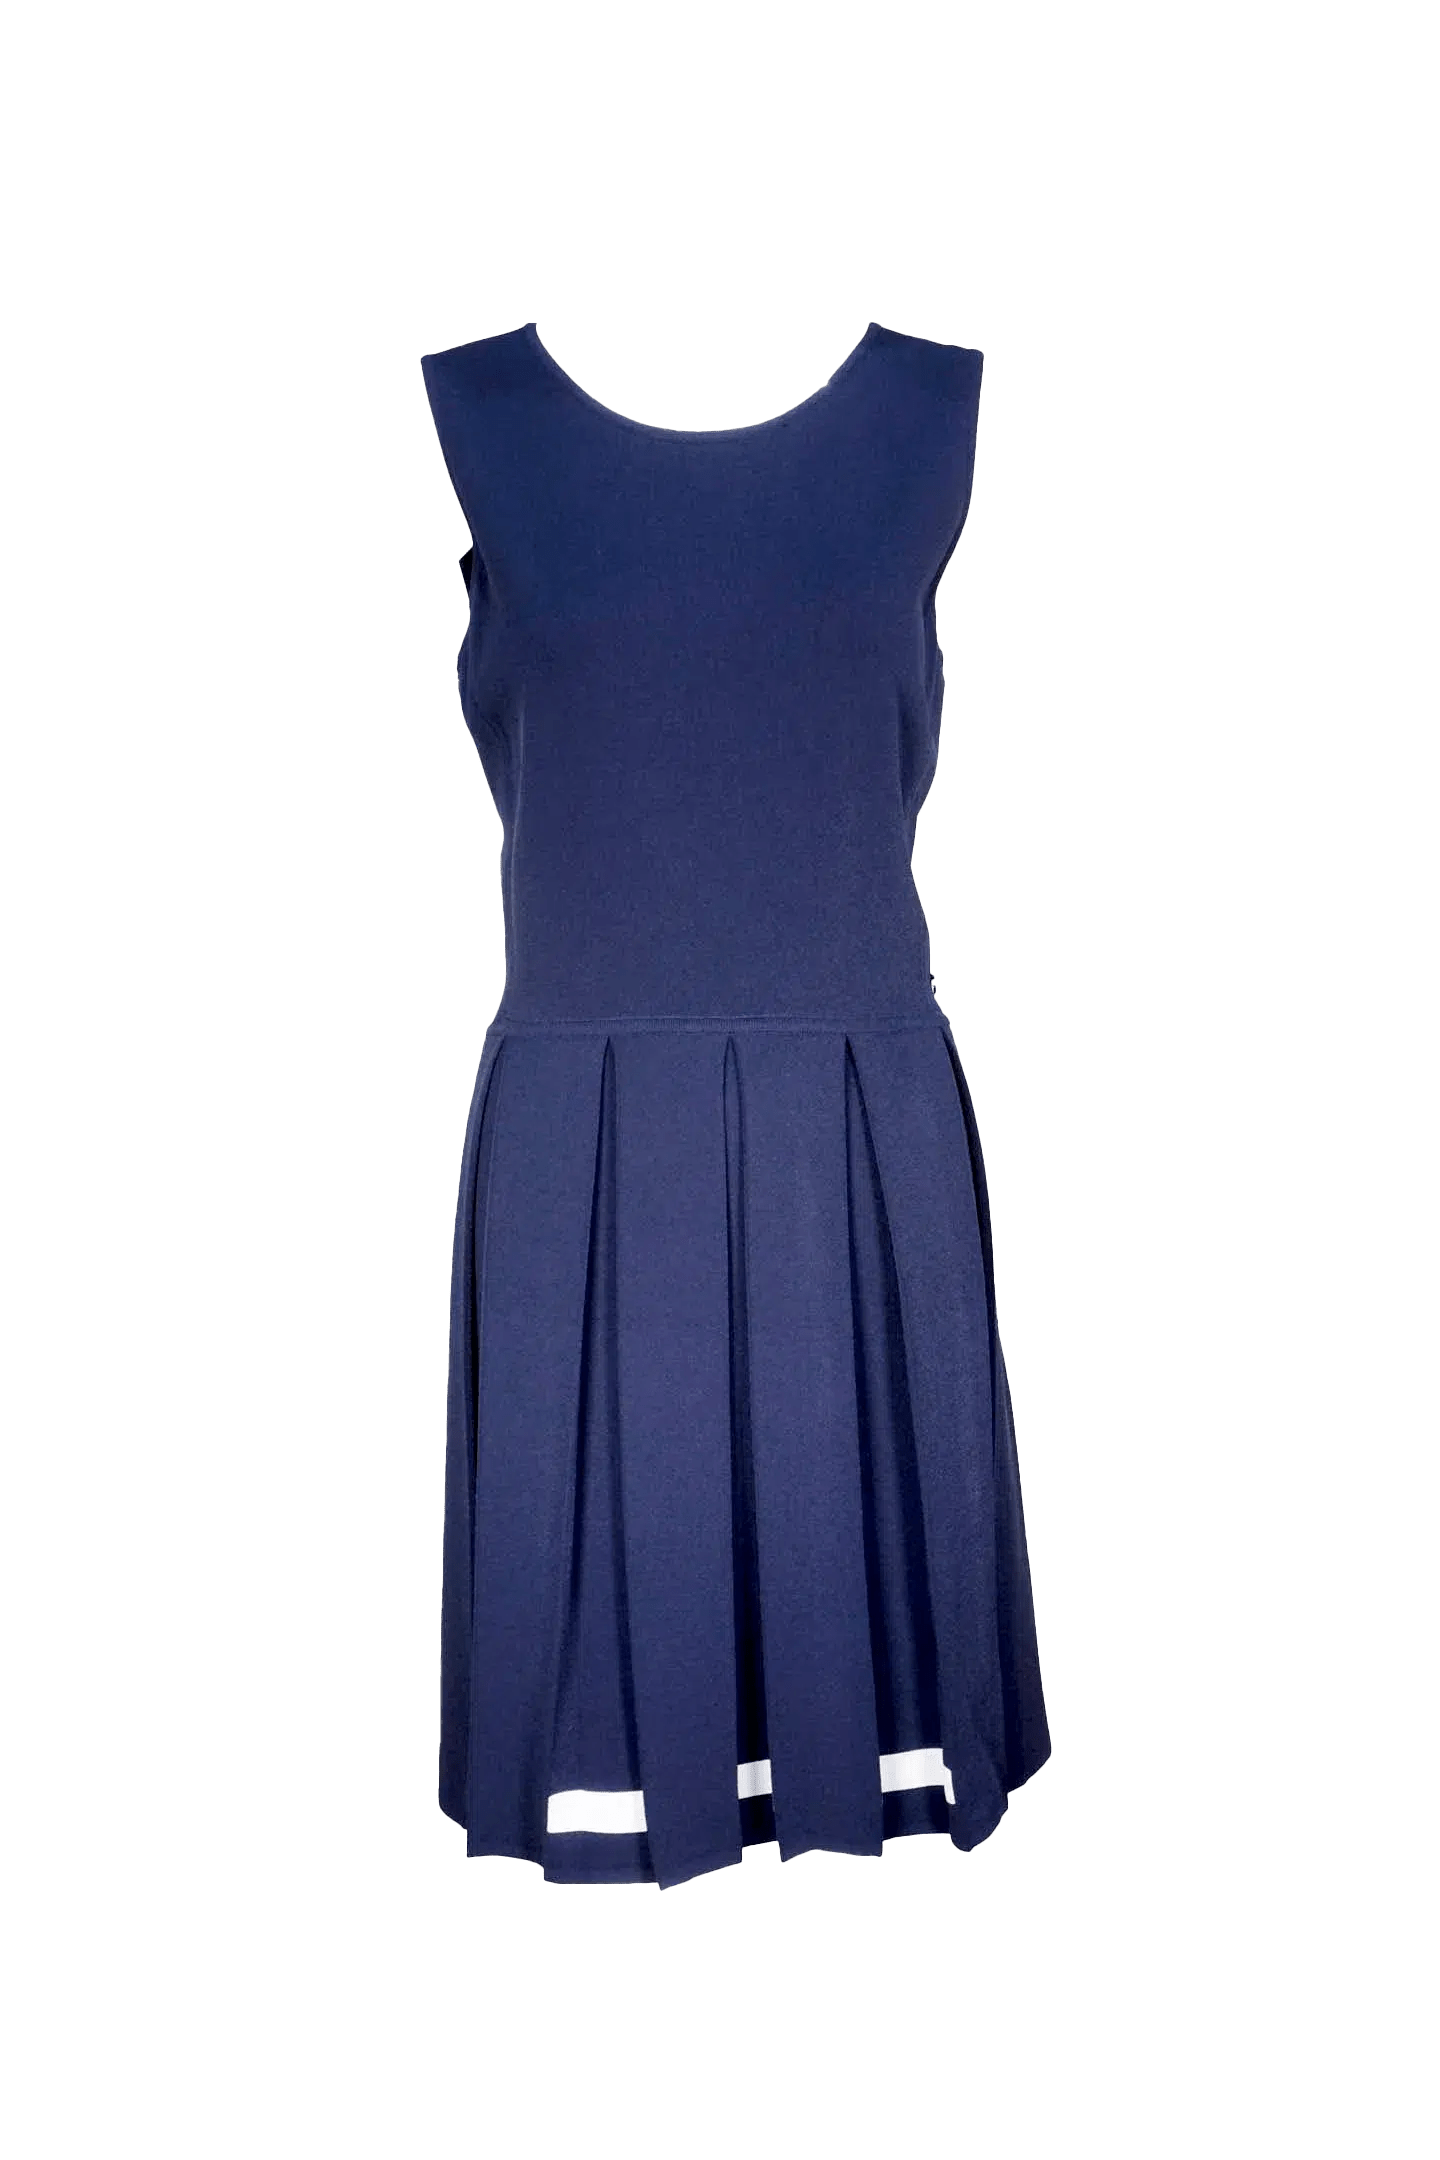 Chanel Size 40 Sleeveless Navy Dress